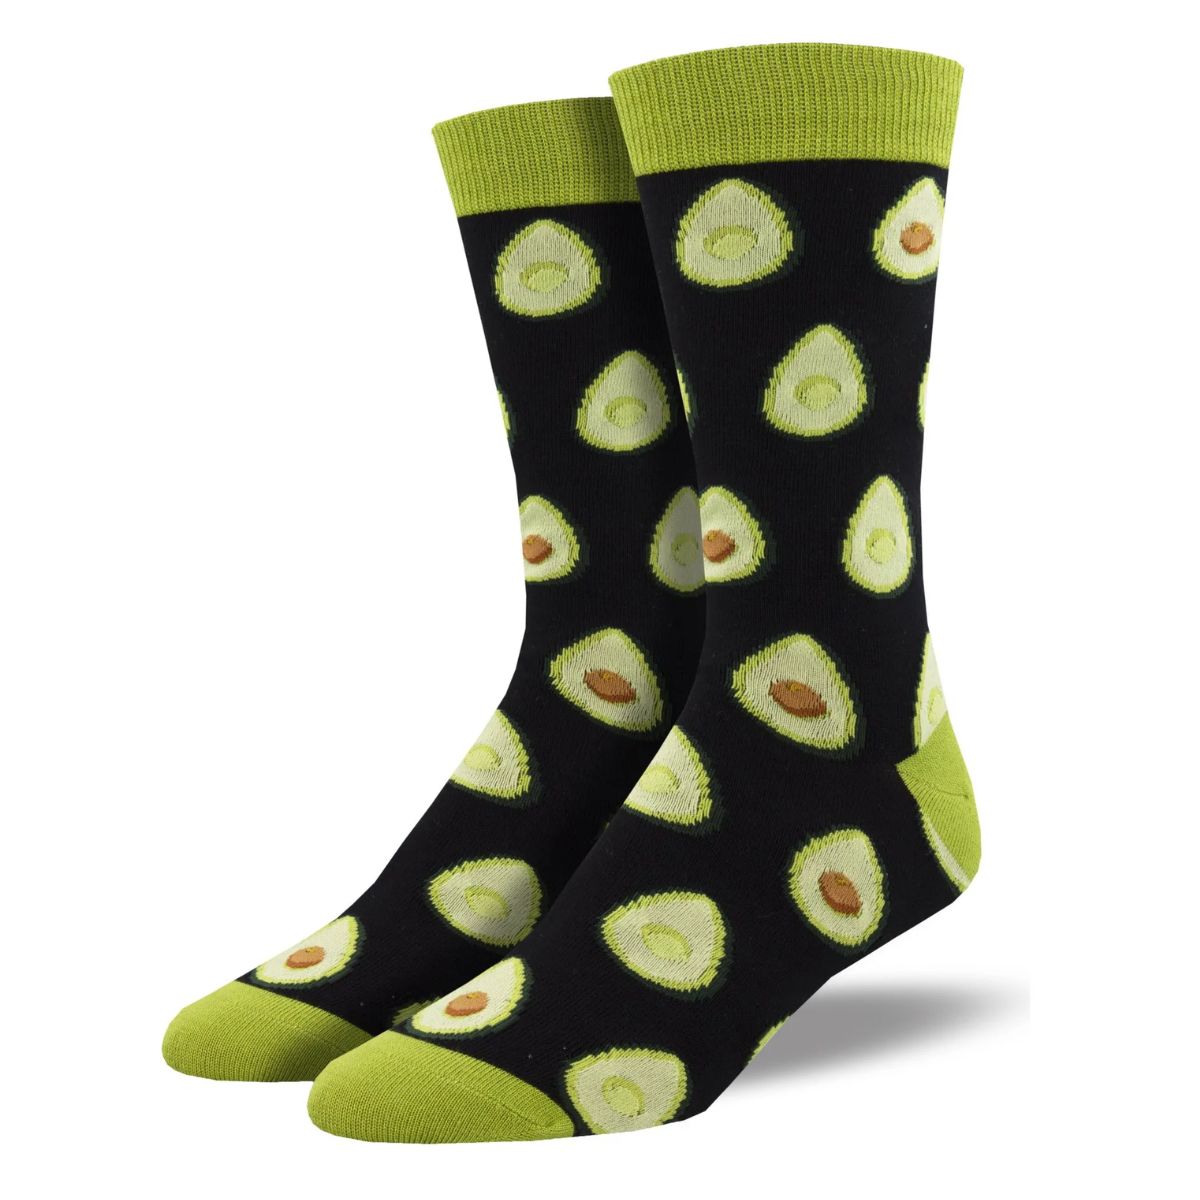 Any way you slice it socks a pair of black crew socks with halved avocado print